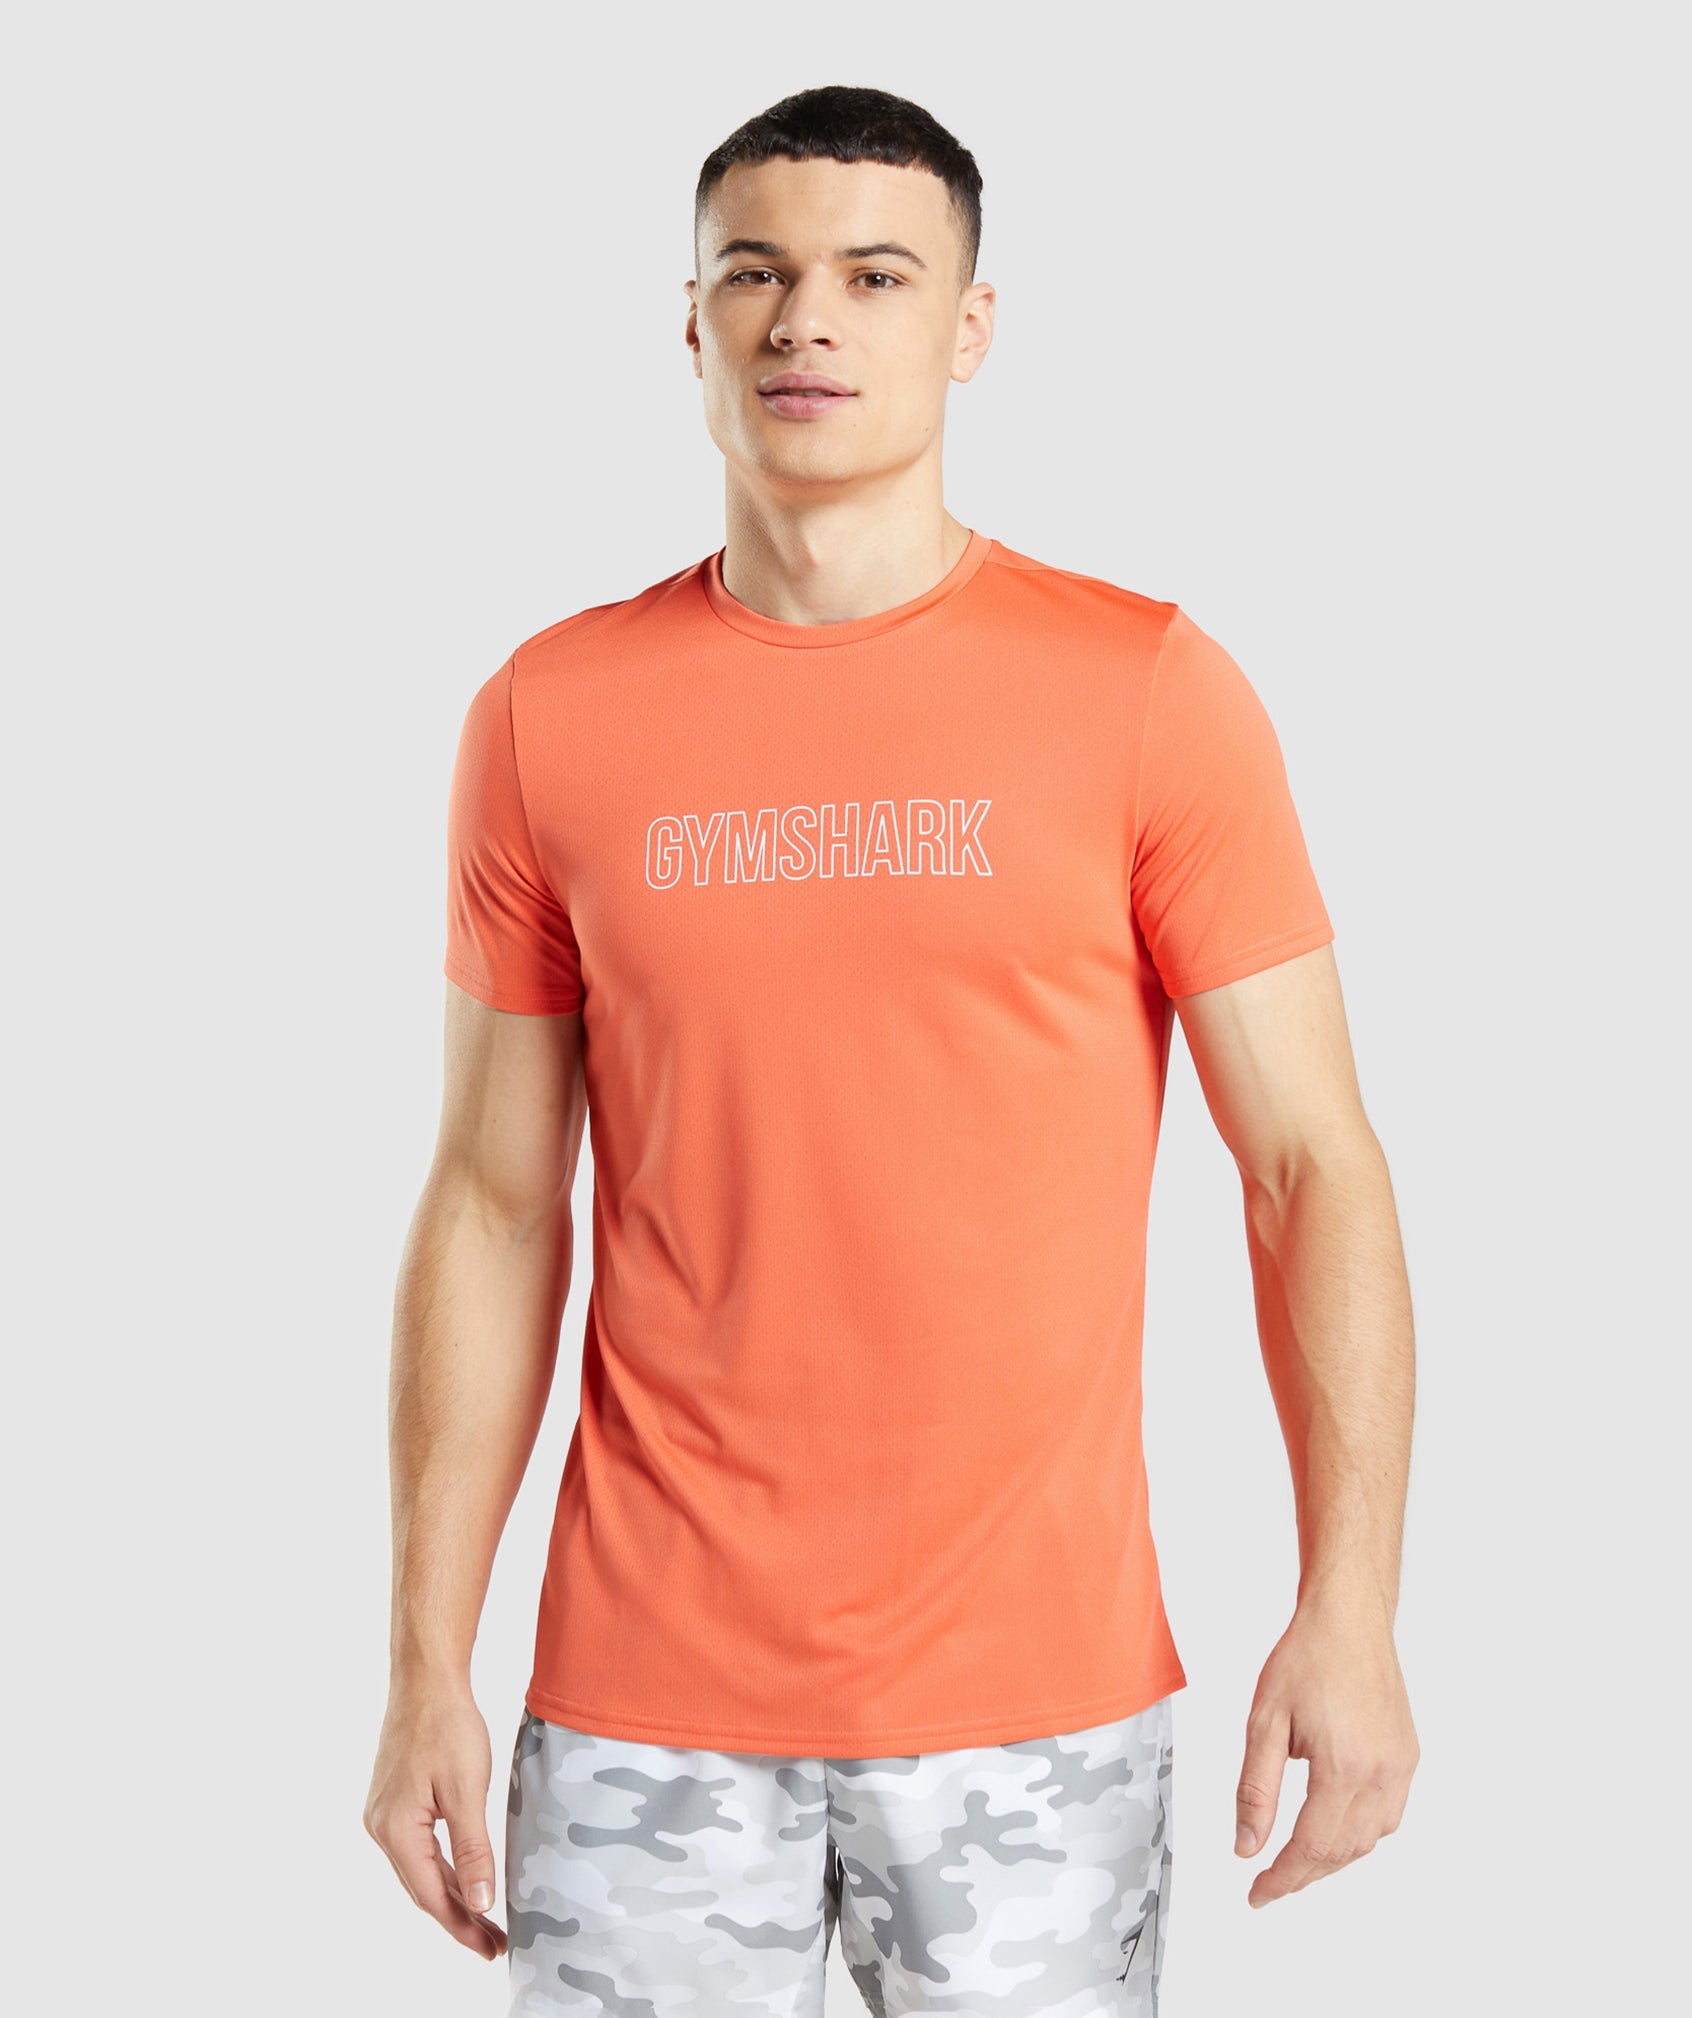 Arrival Graphic T-Shirt in Papaya Orange - view 1